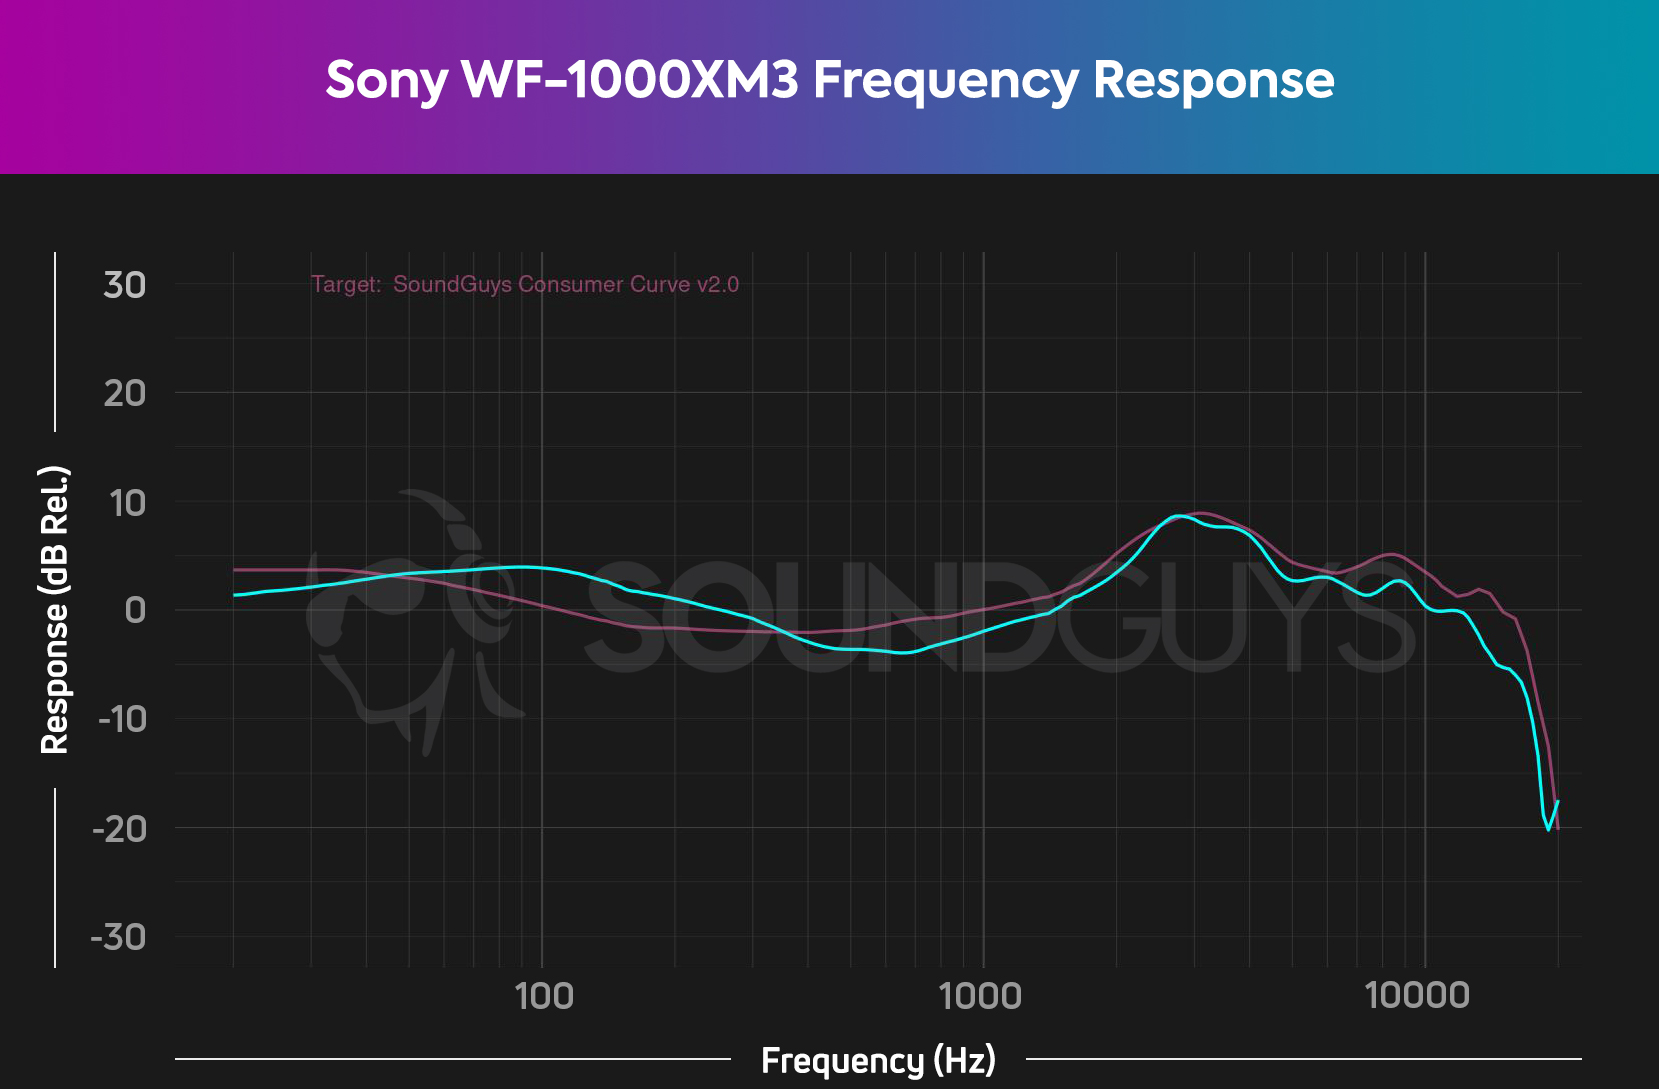 https://www.soundguys.com/wp-content/uploads/2021/11/Sony-WF-1000XM3-frequency-response-HATS-SoundGuys-Consumer-Curve-V2.jpg